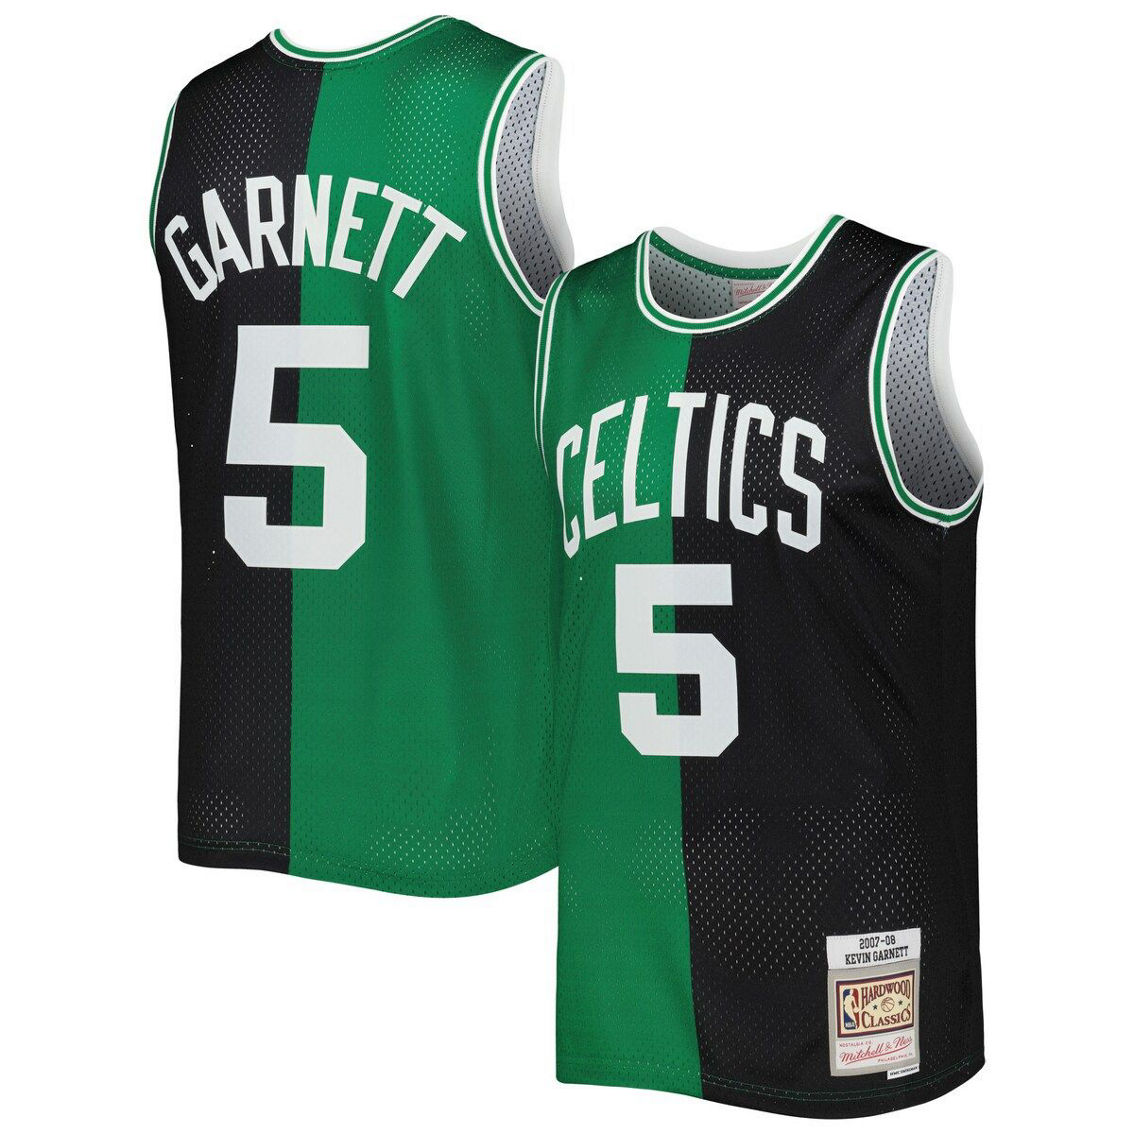 Kevin Garnett jersey NEW Mitchell & Ness XL. Celtics